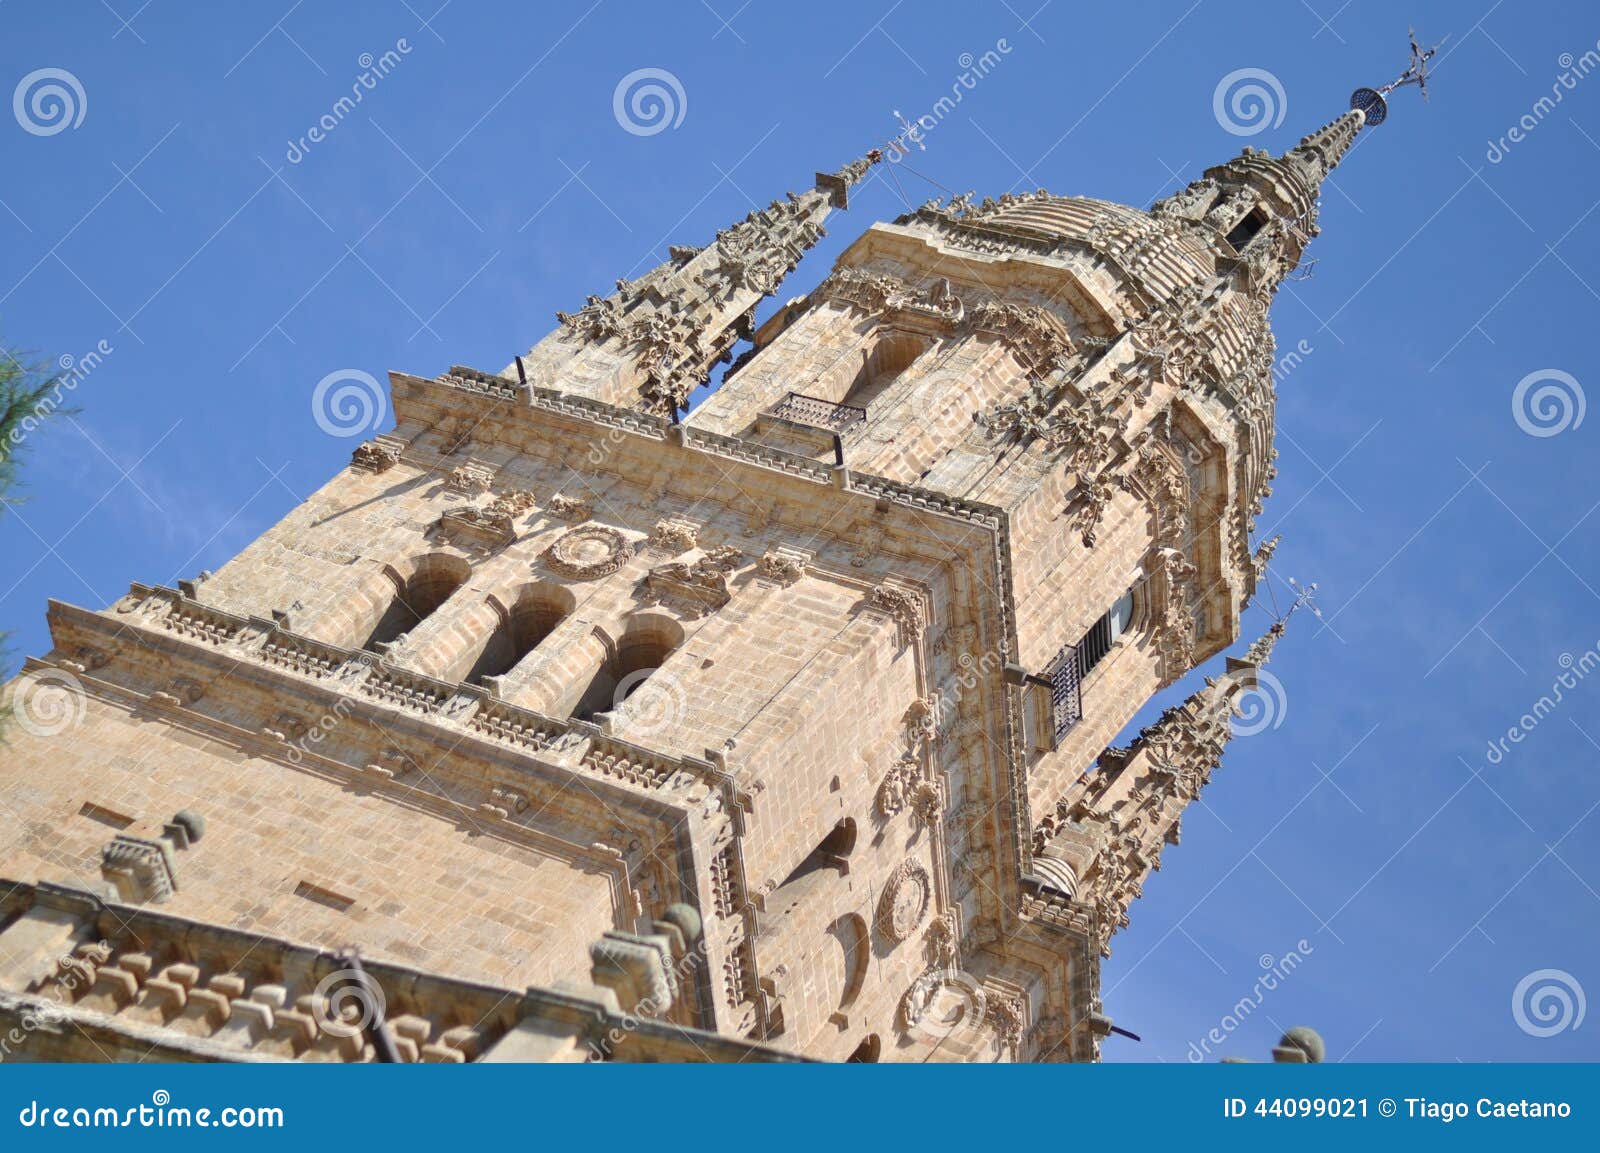 detail of salamanca cathedral jerÃÂ³nimo tower